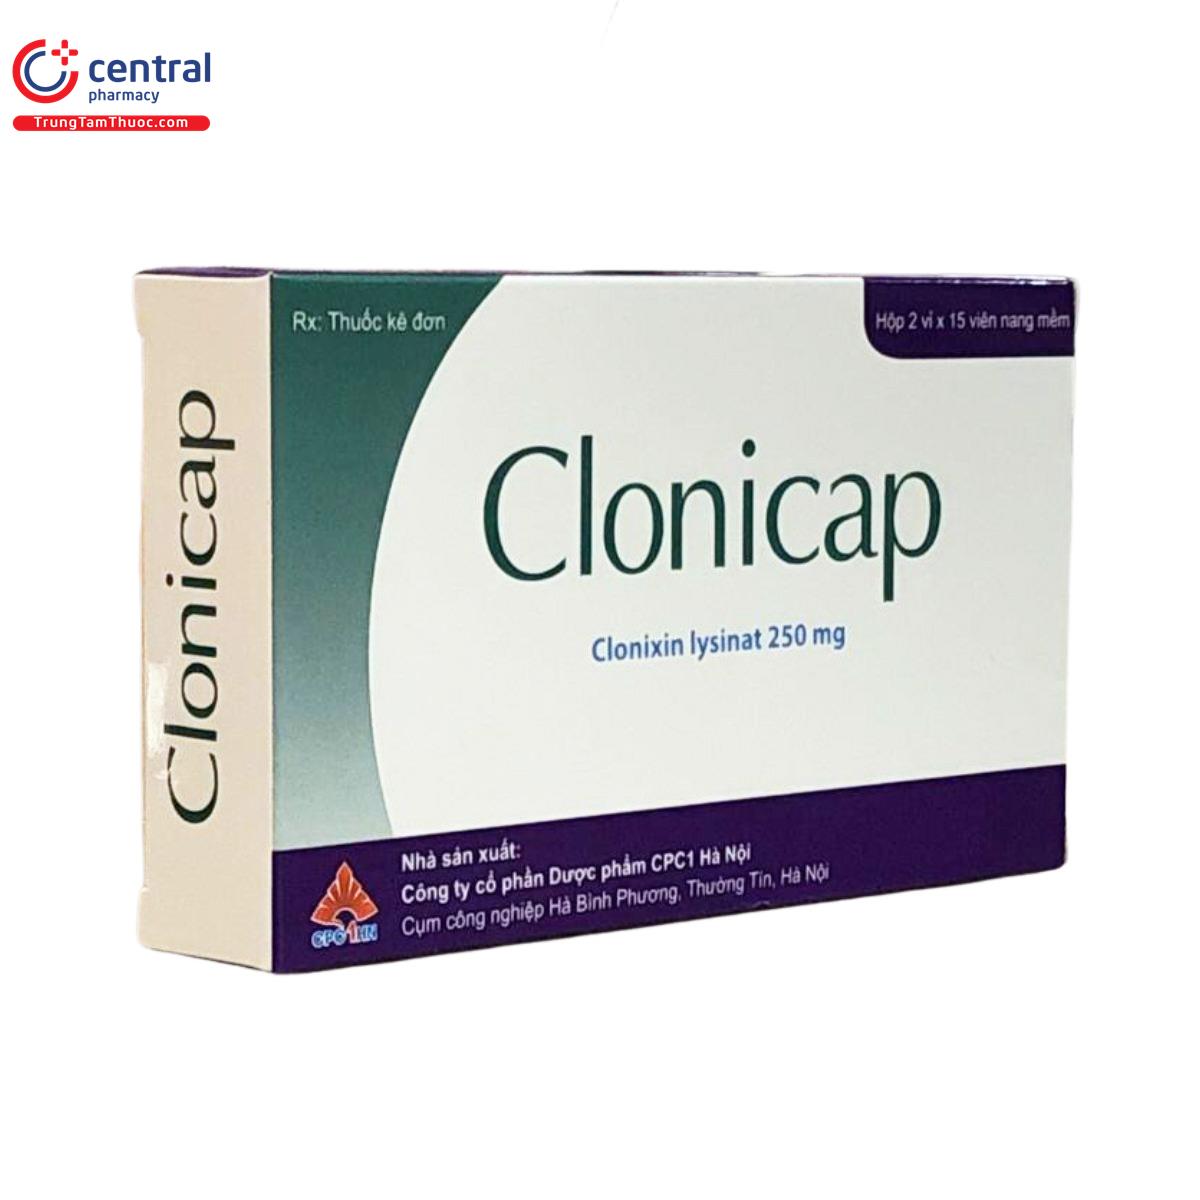 clonicap 8 R7522